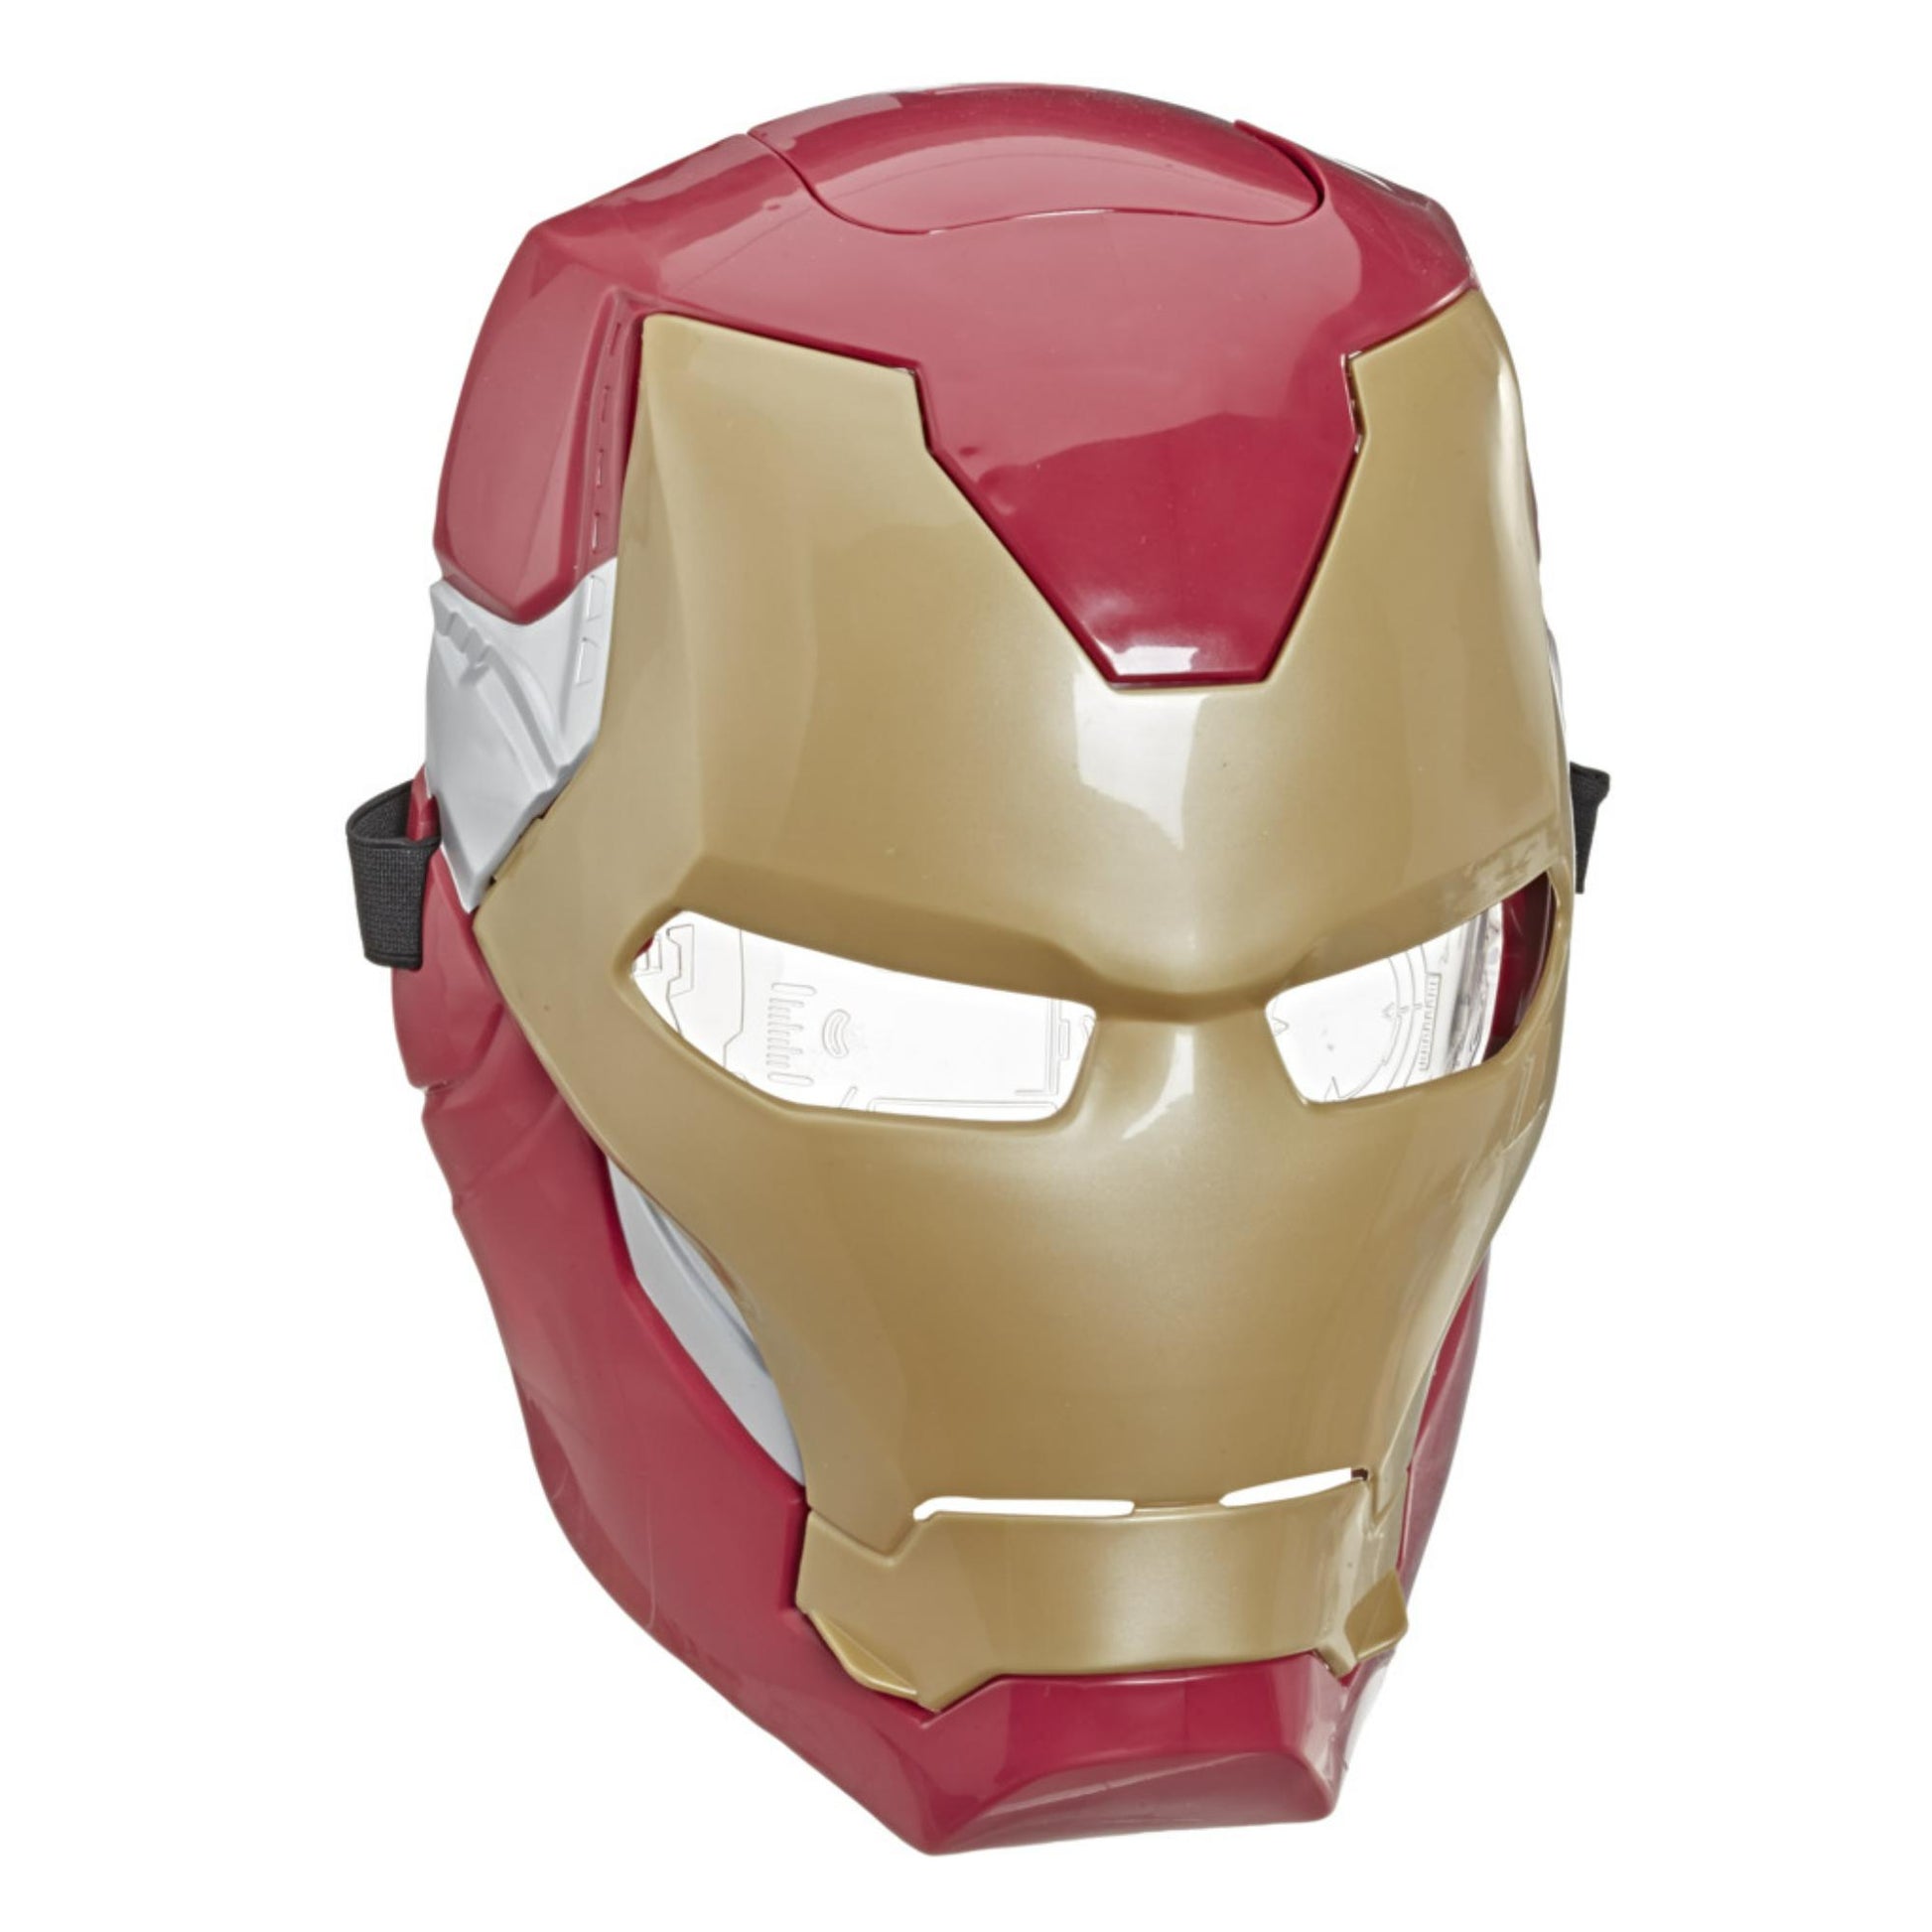 Avengers - Iron Man FX Mask